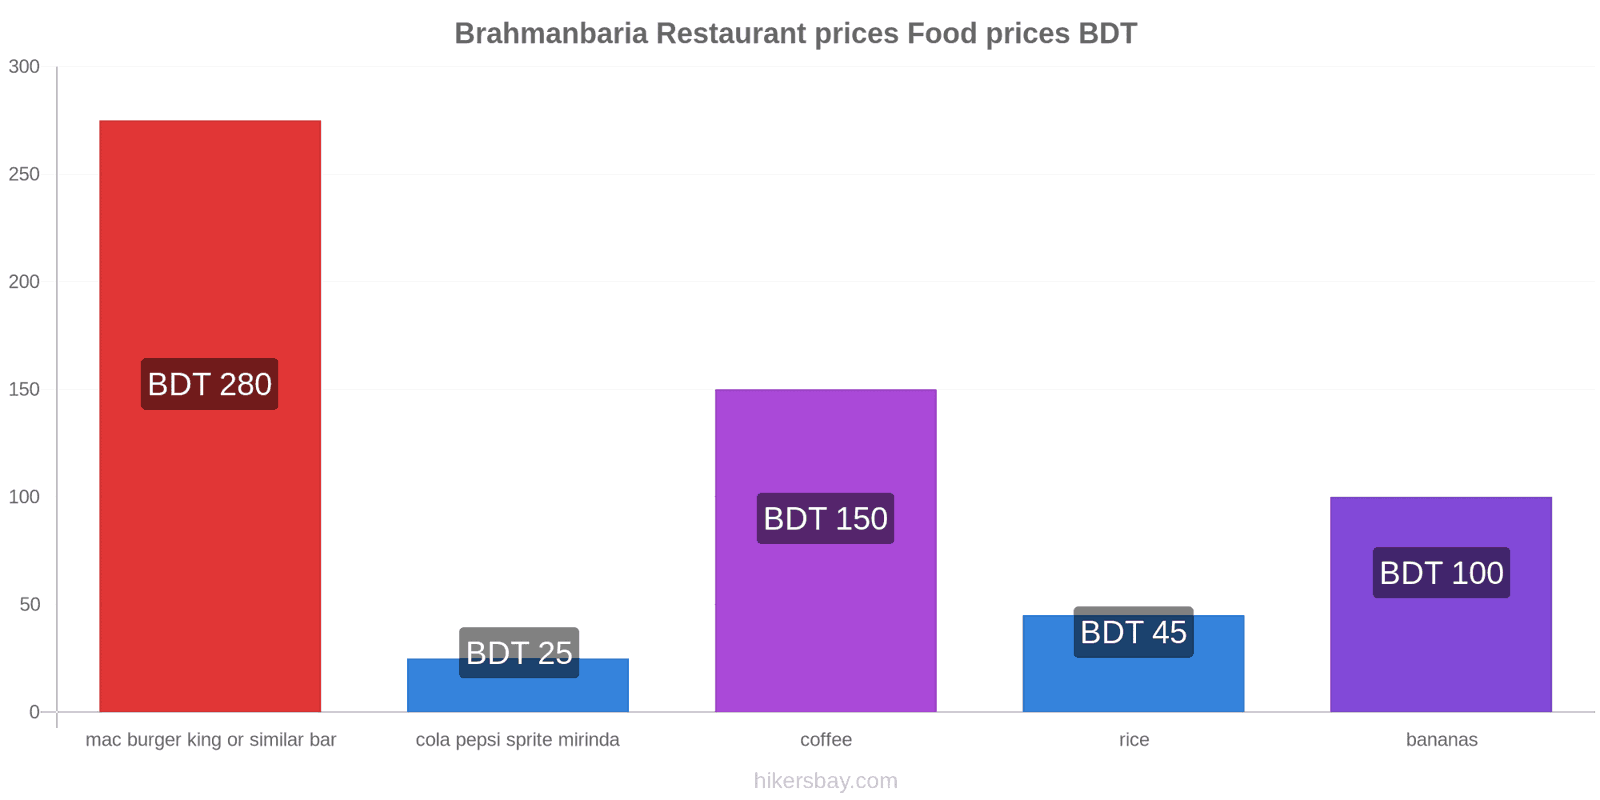 Brahmanbaria price changes hikersbay.com